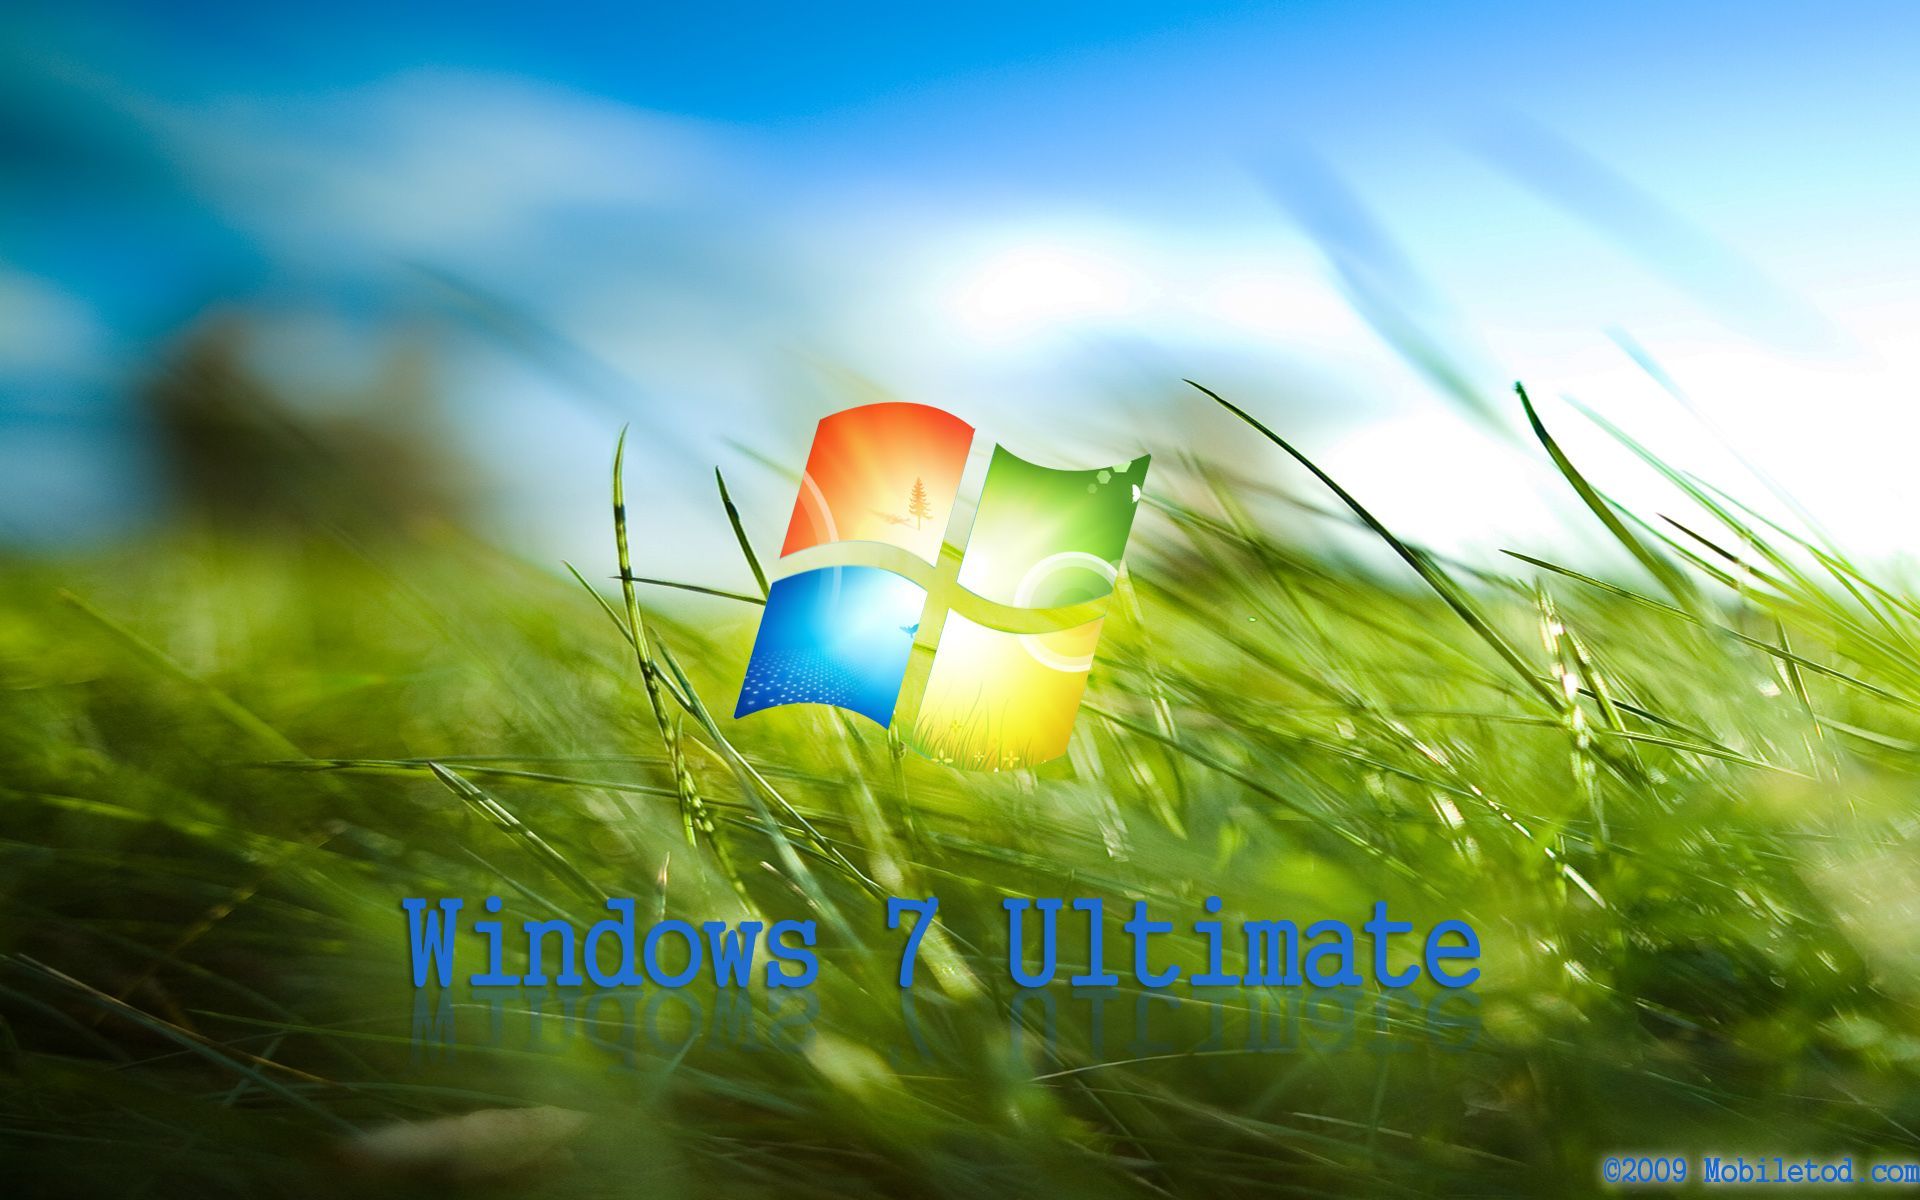 Windows 7 Ultimate Wallpaper Hd